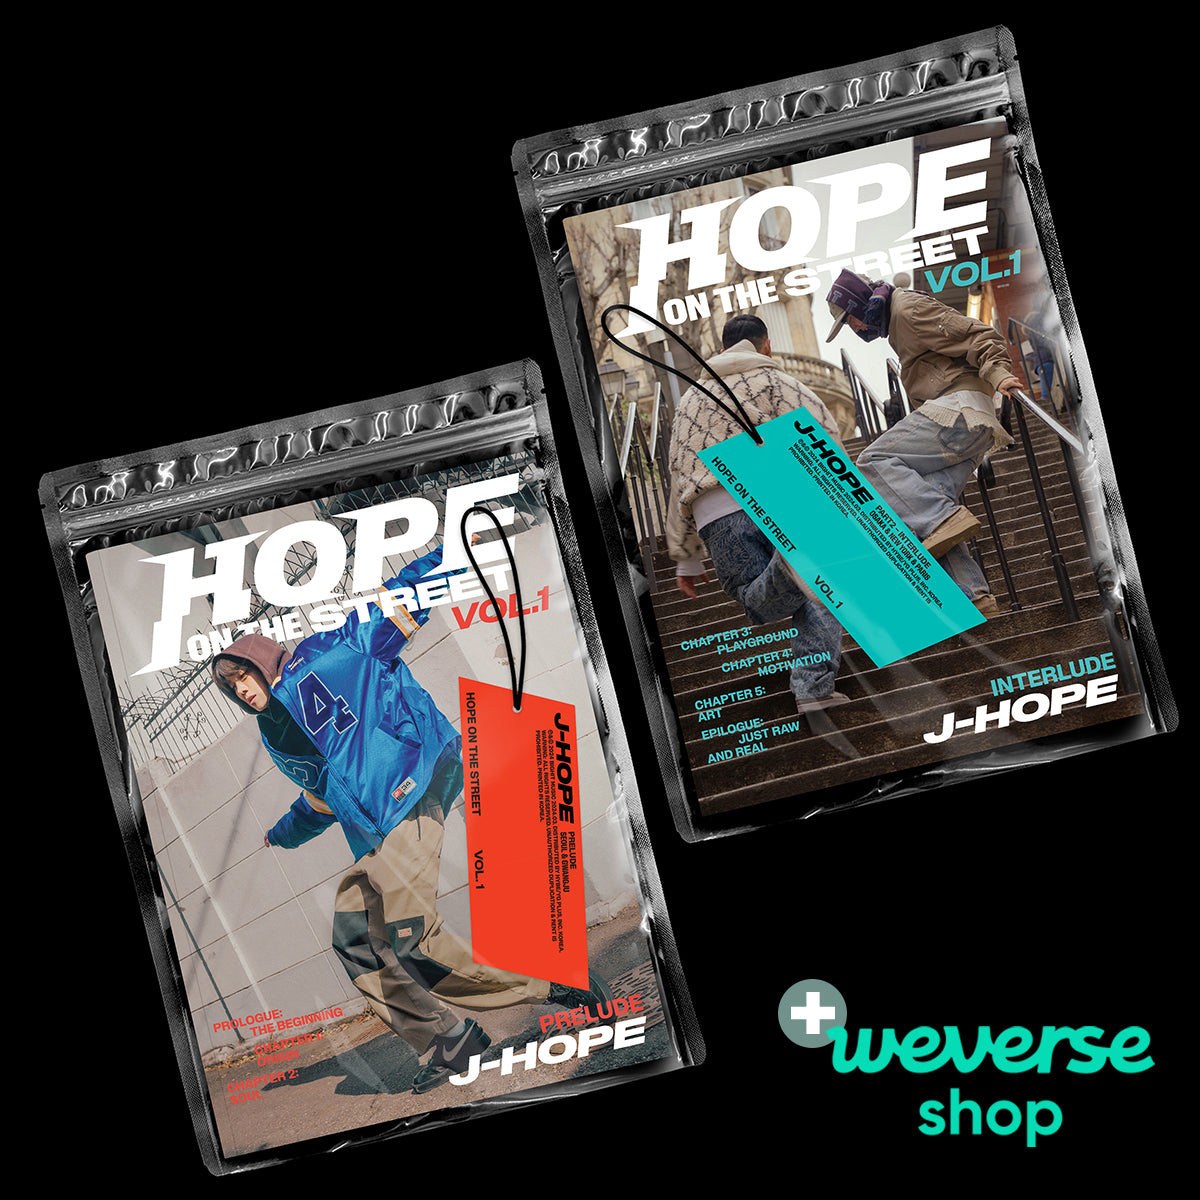 j-hope (BTS) - HOPE ON THE STREET VOL.1 + Weverse Shop P.O.B